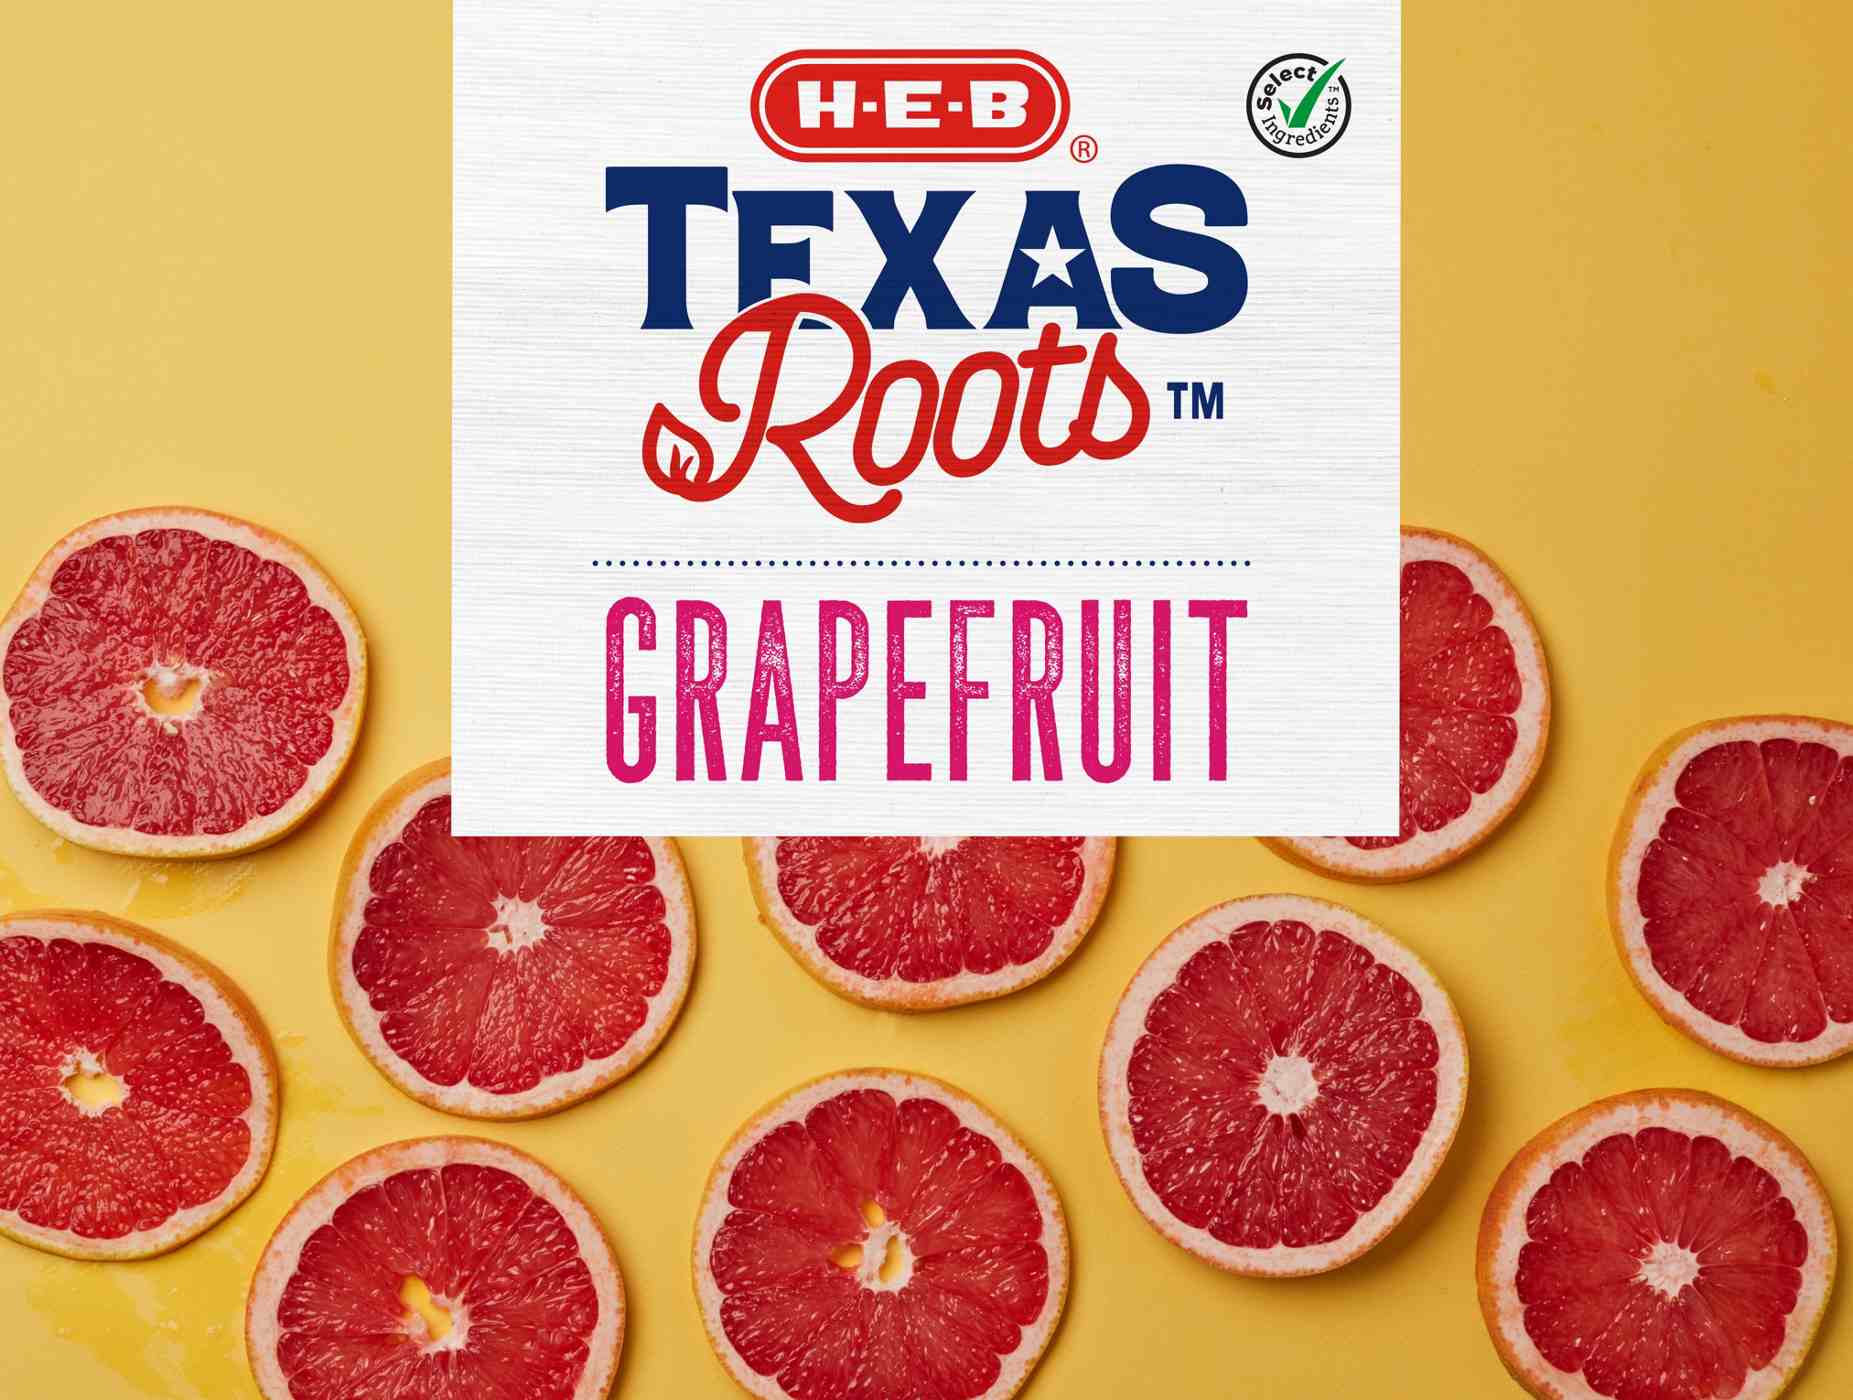 H-E-B Texas Roots Fresh Grapefruit; image 4 of 4